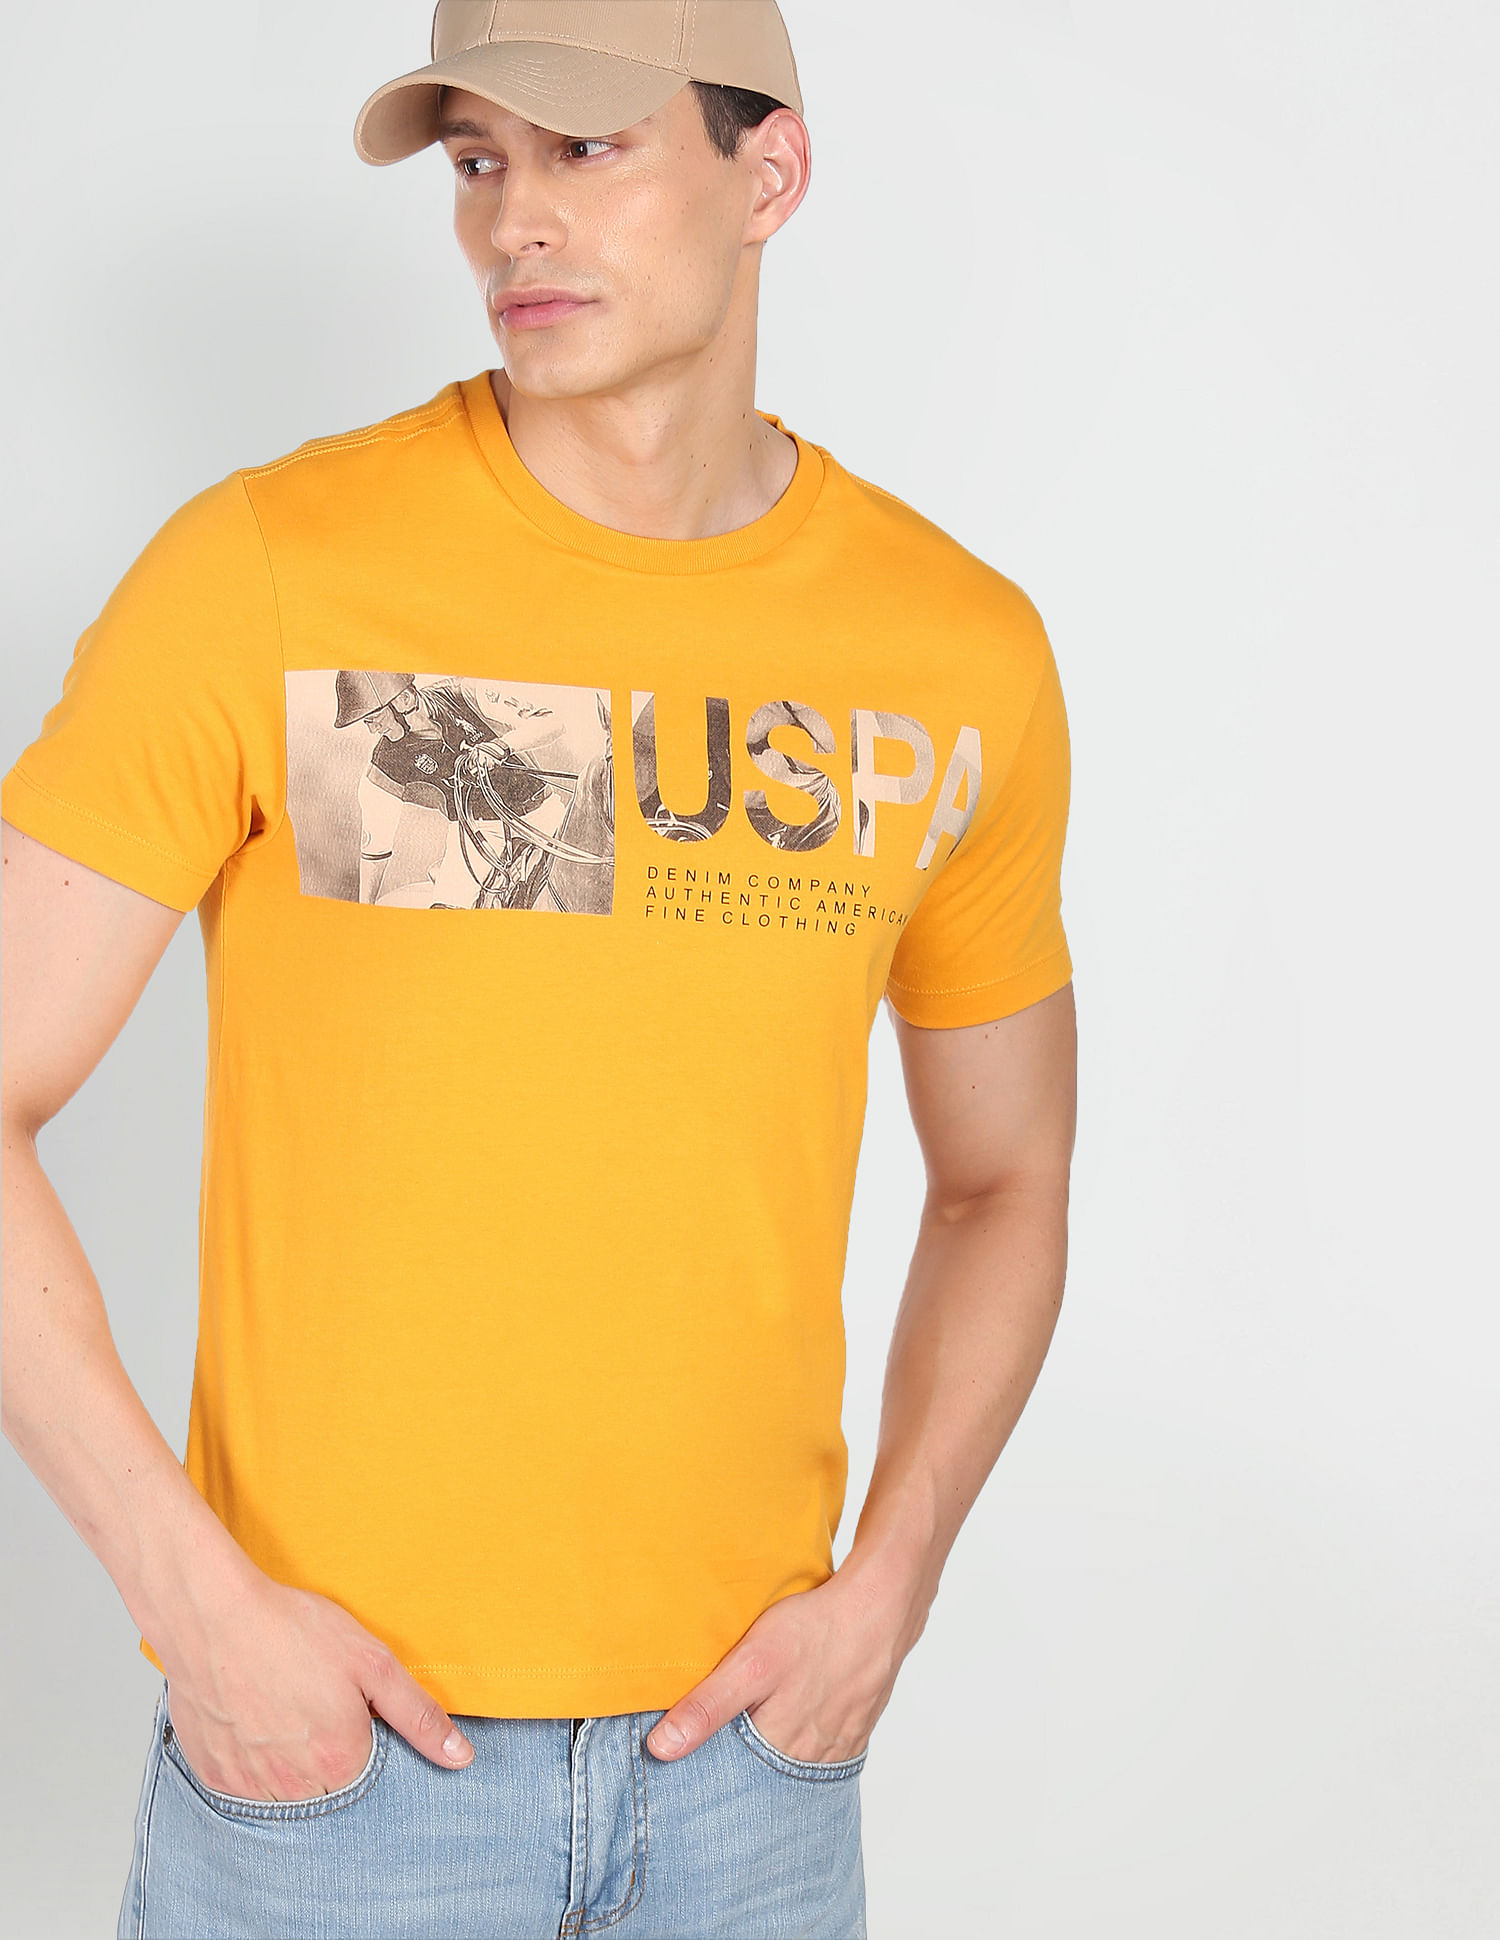 Buy U.S. Polo Assn. Denim Co. Cotton Graphic Print T-Shirt - NNNOW.com